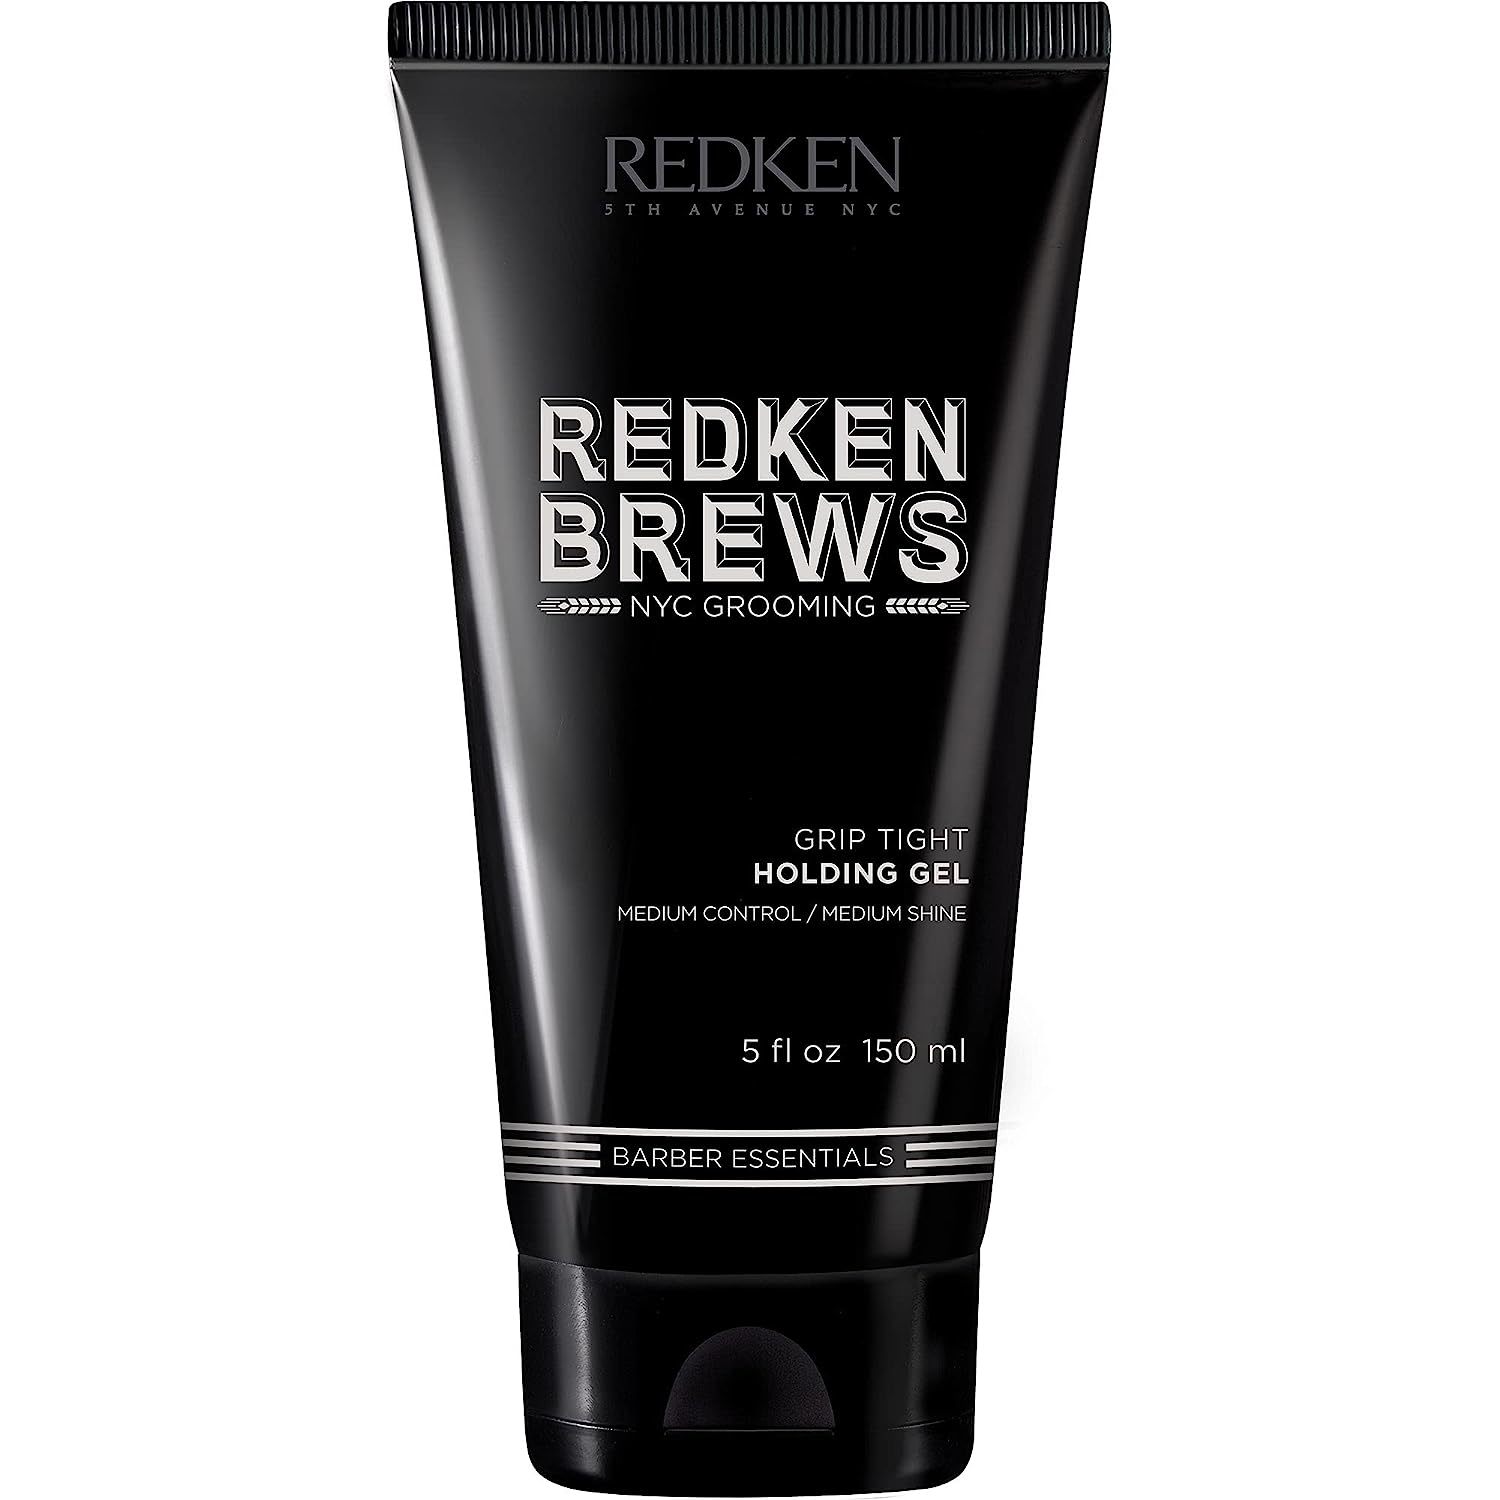 Redken Brews Grip Tight Holding Gel 5 oz  - $28.66